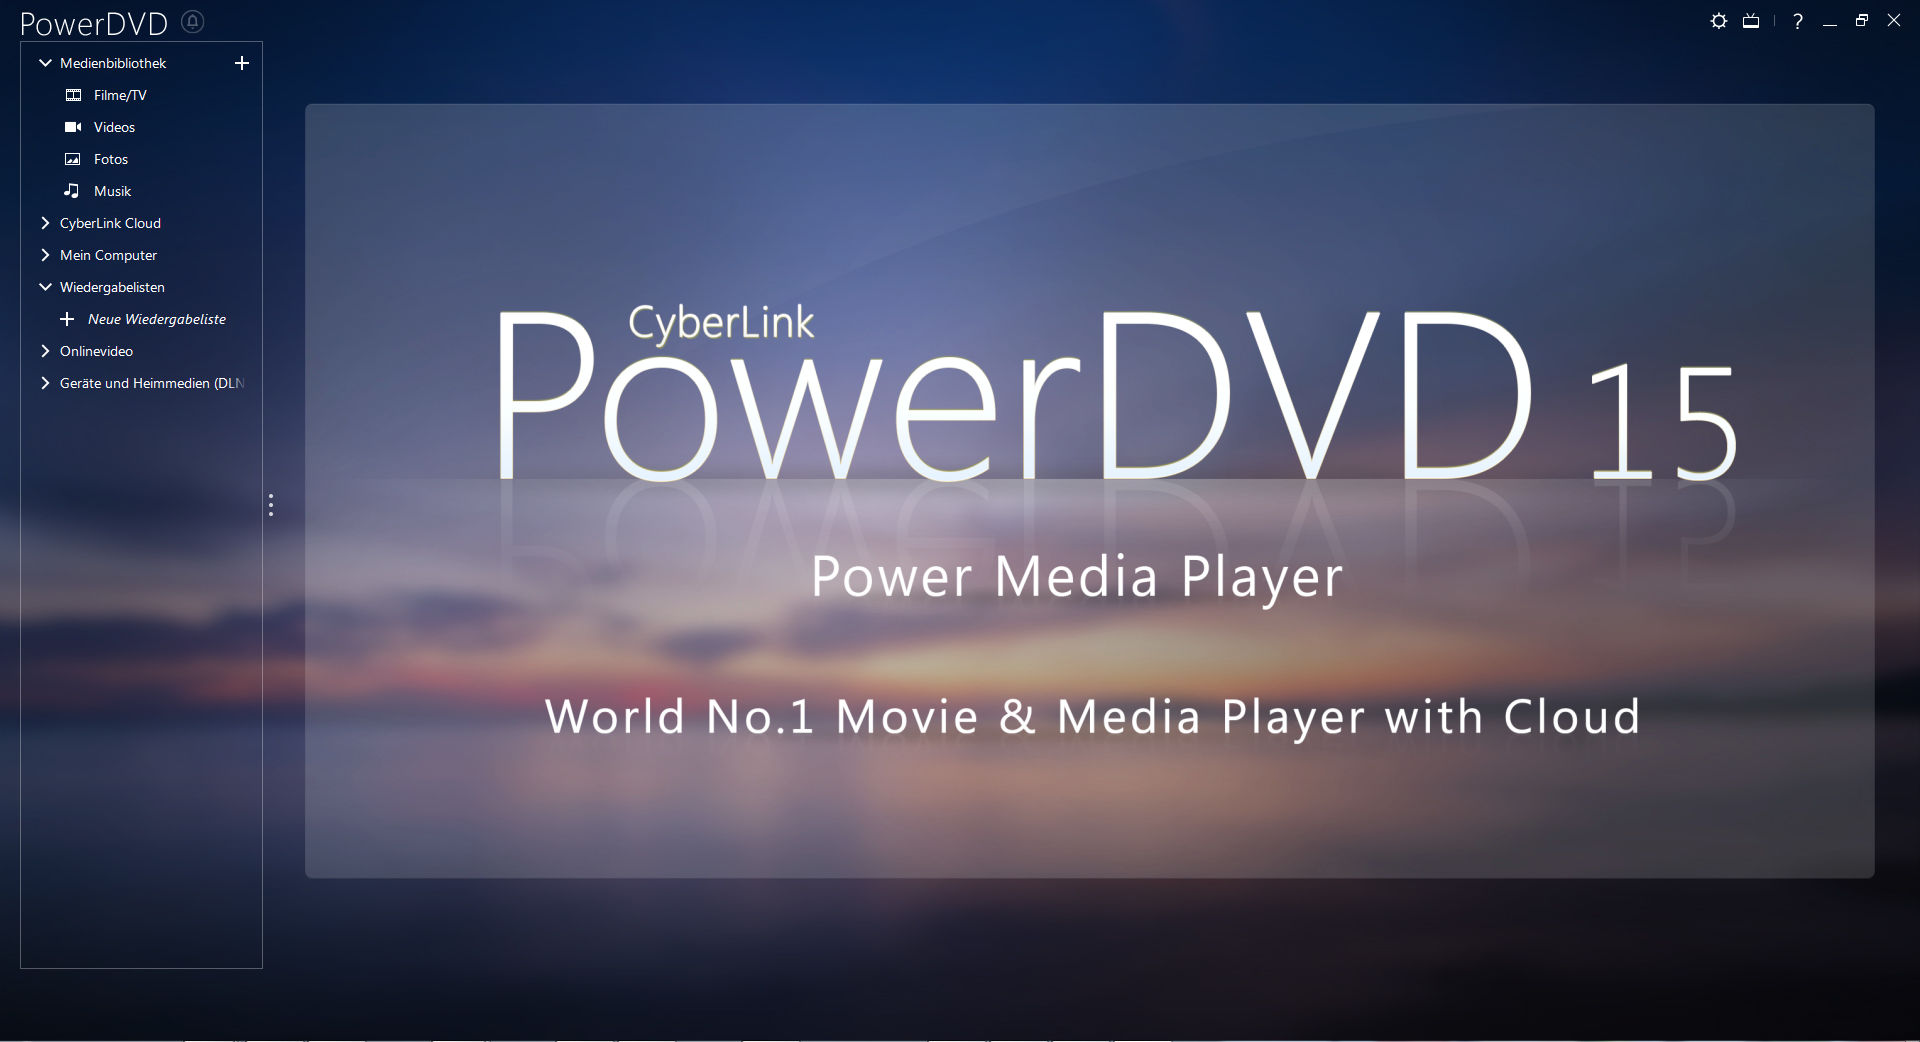 powerdvd service